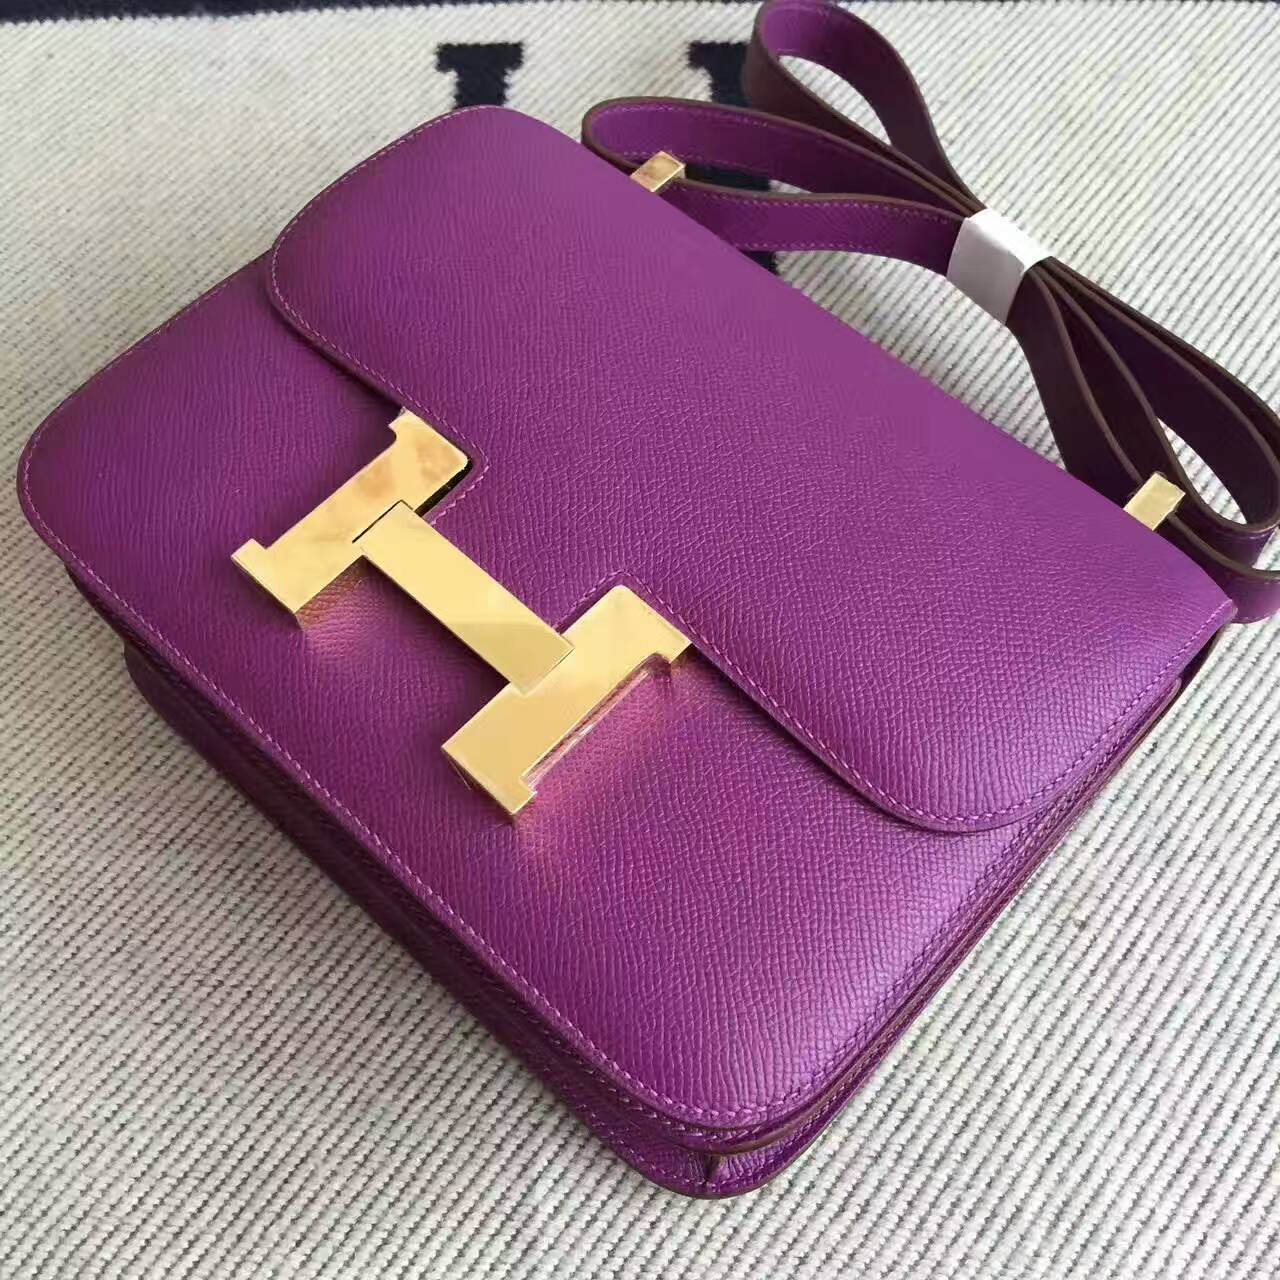 Discount Hermes P9 Anemone Purple Epsom Leather Constance Bag 24cm